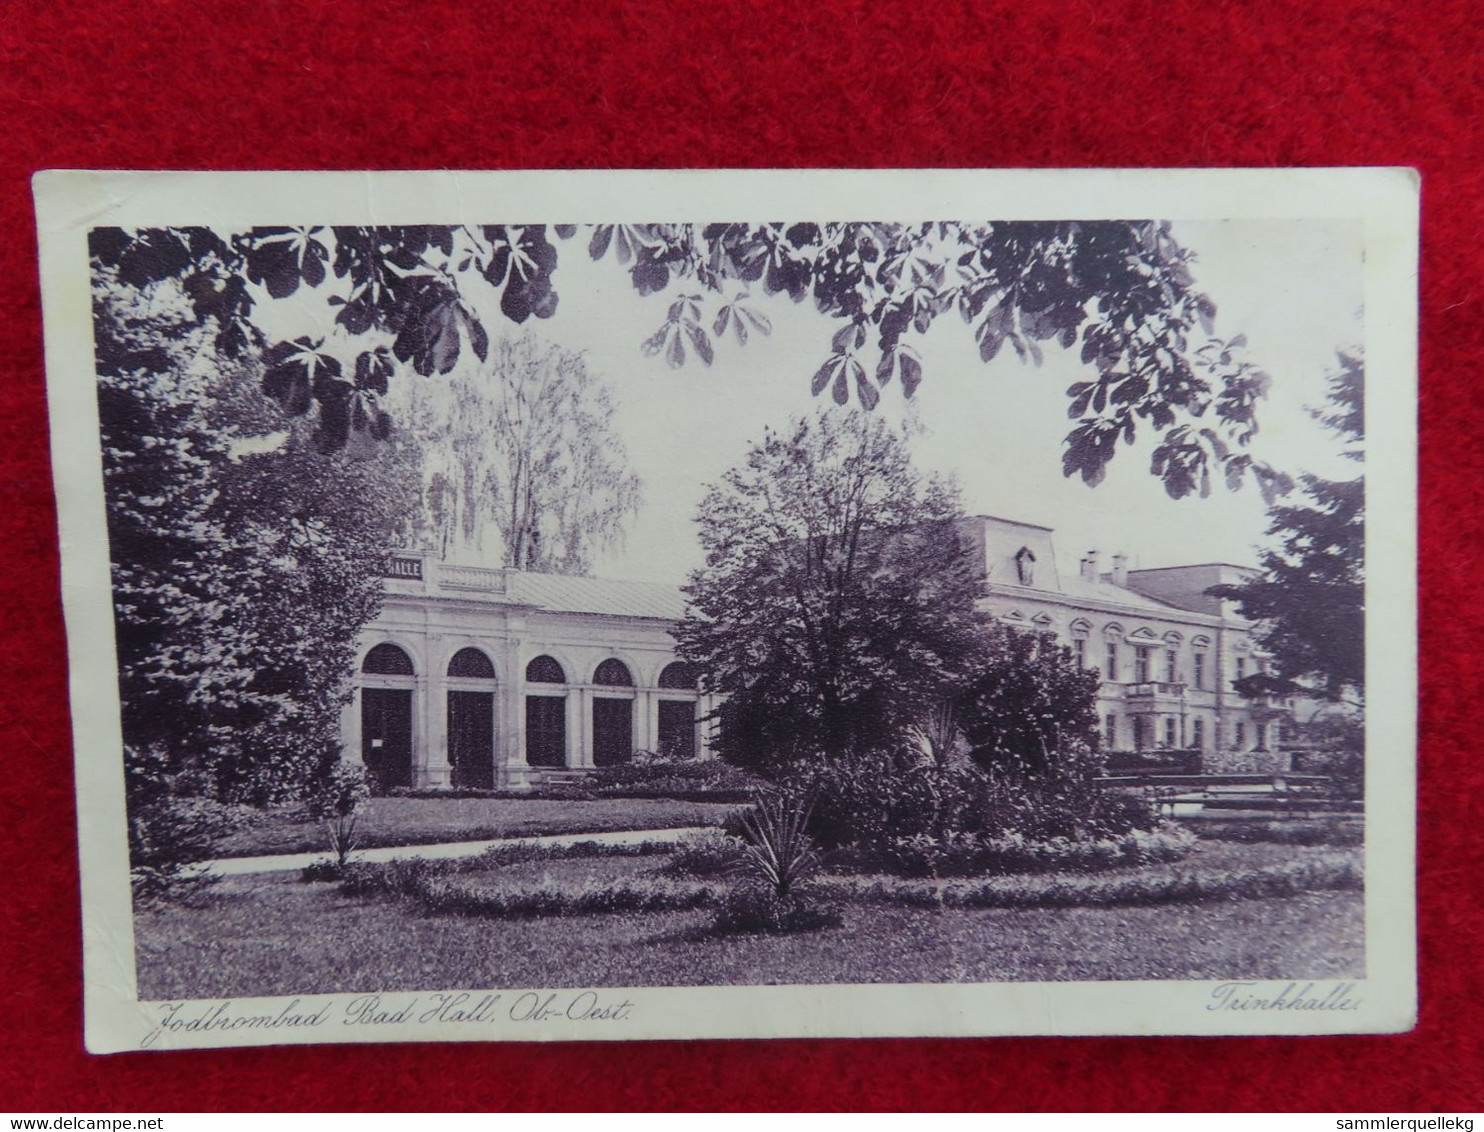 AK: Jodbrombad Bad Hall, Gelaufen 4. VI. 1931 Ohne Marke (Nr. 197) - Bad Hall